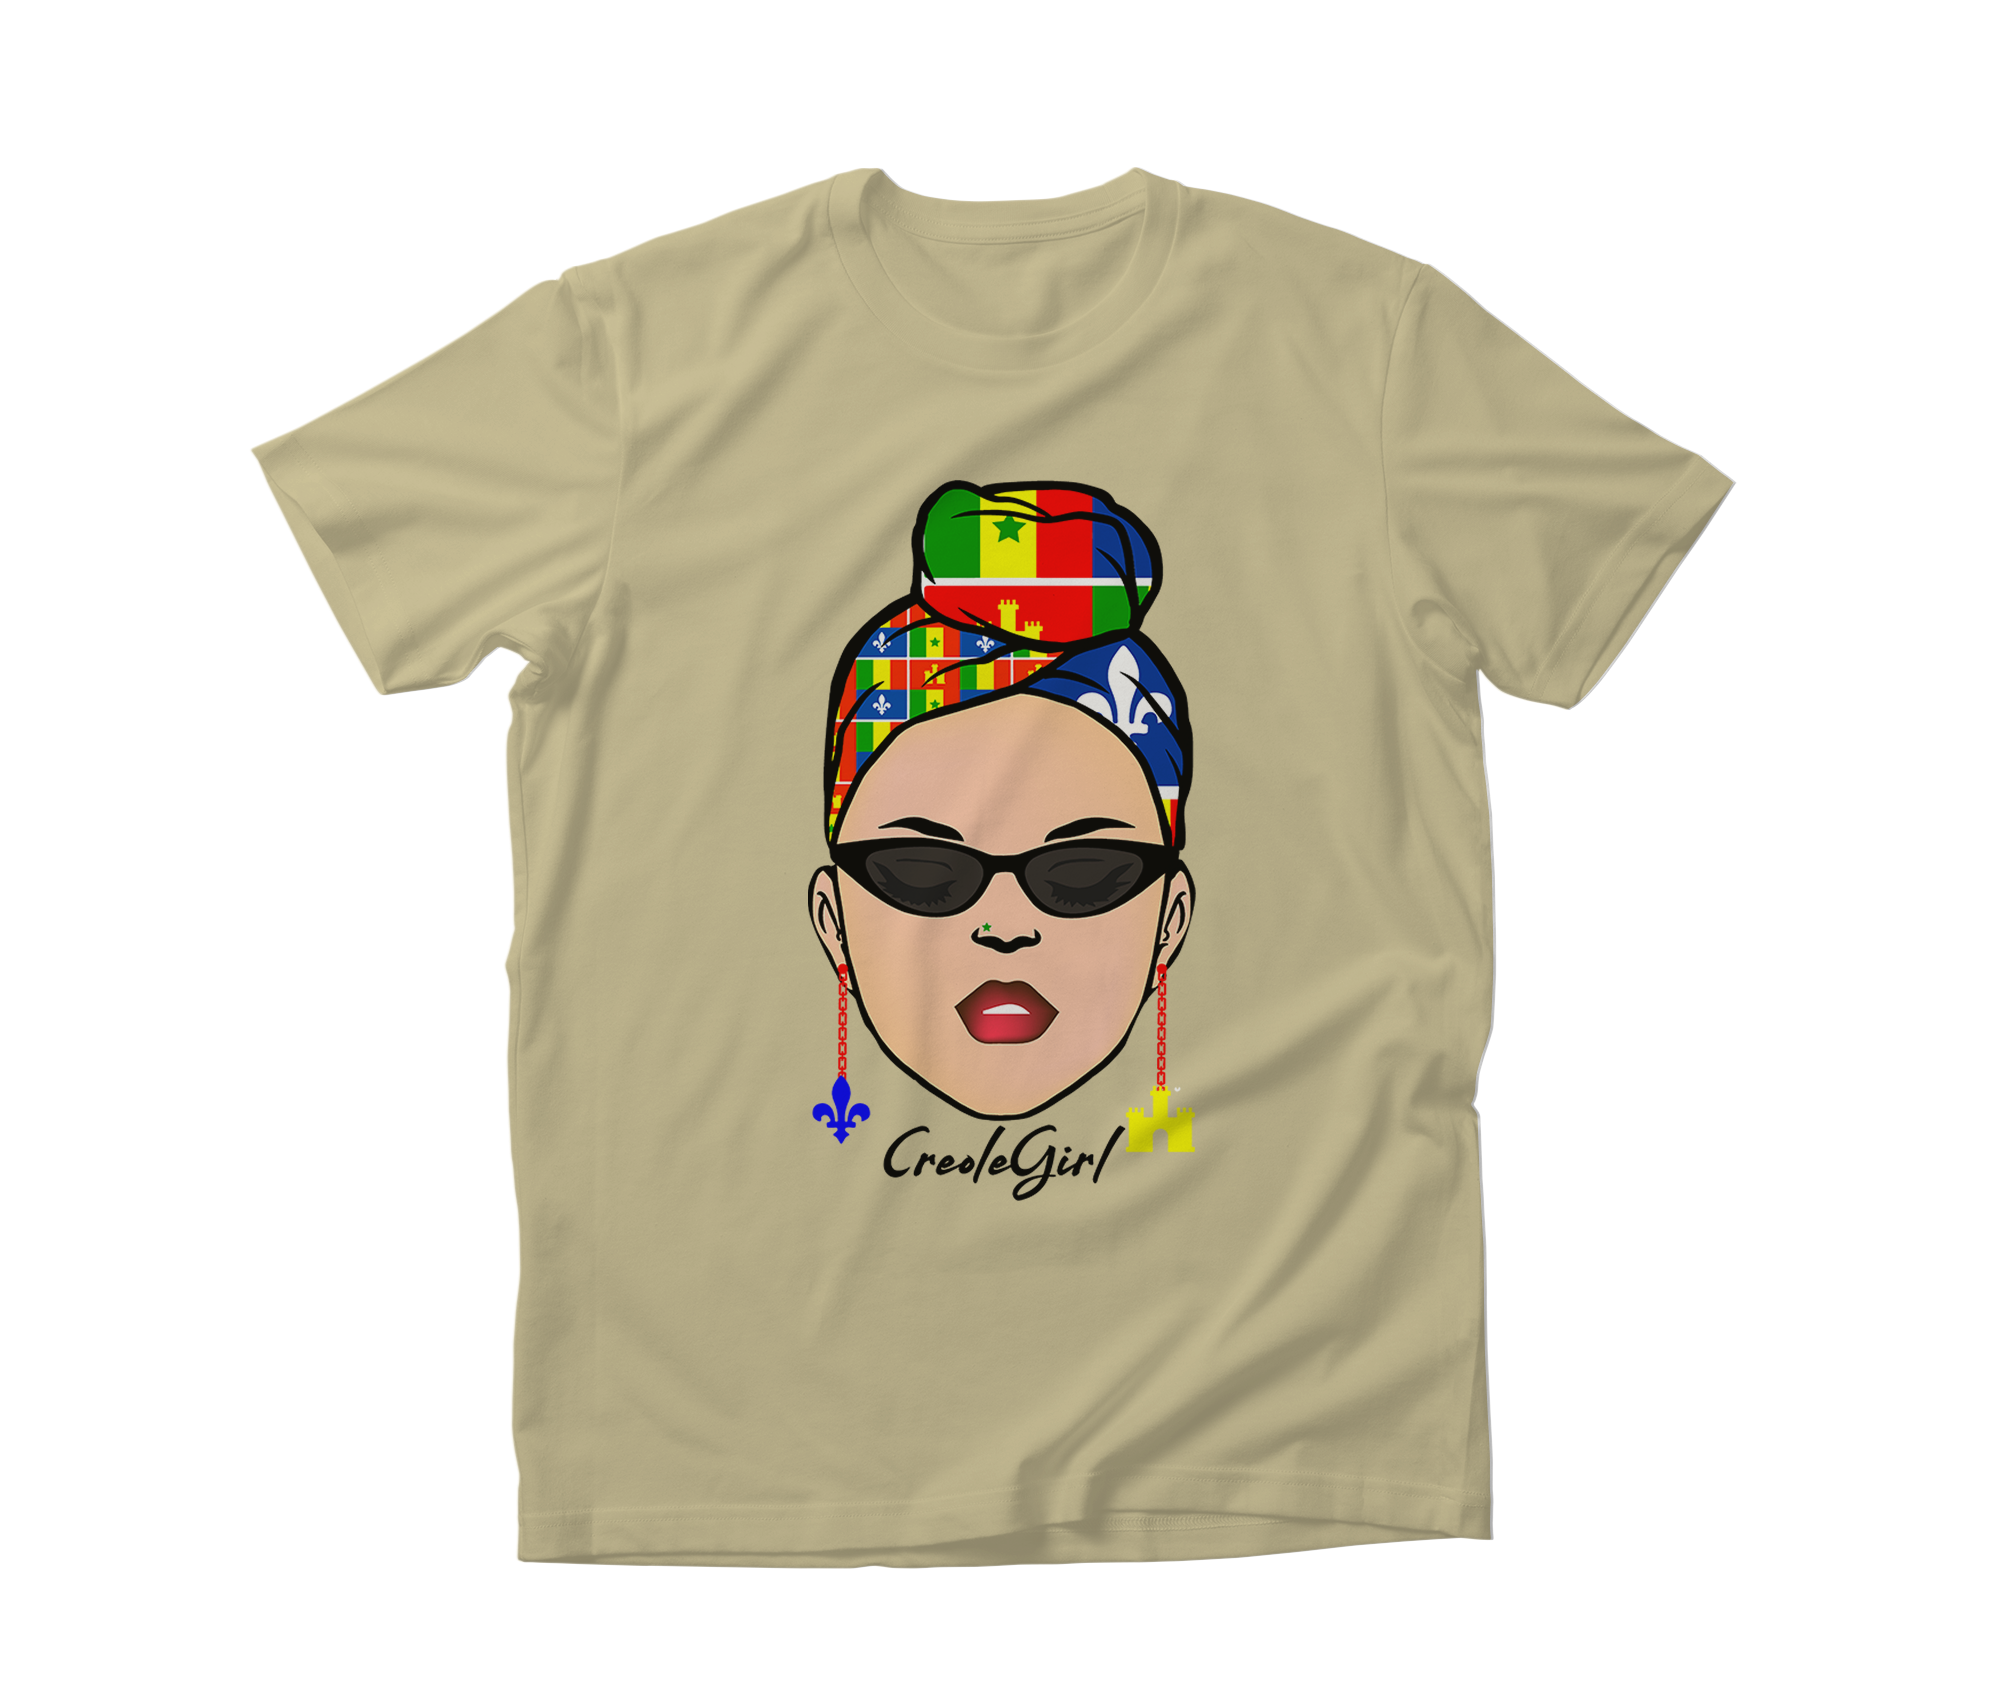 That Louisiana Creole Girl T-Shirt